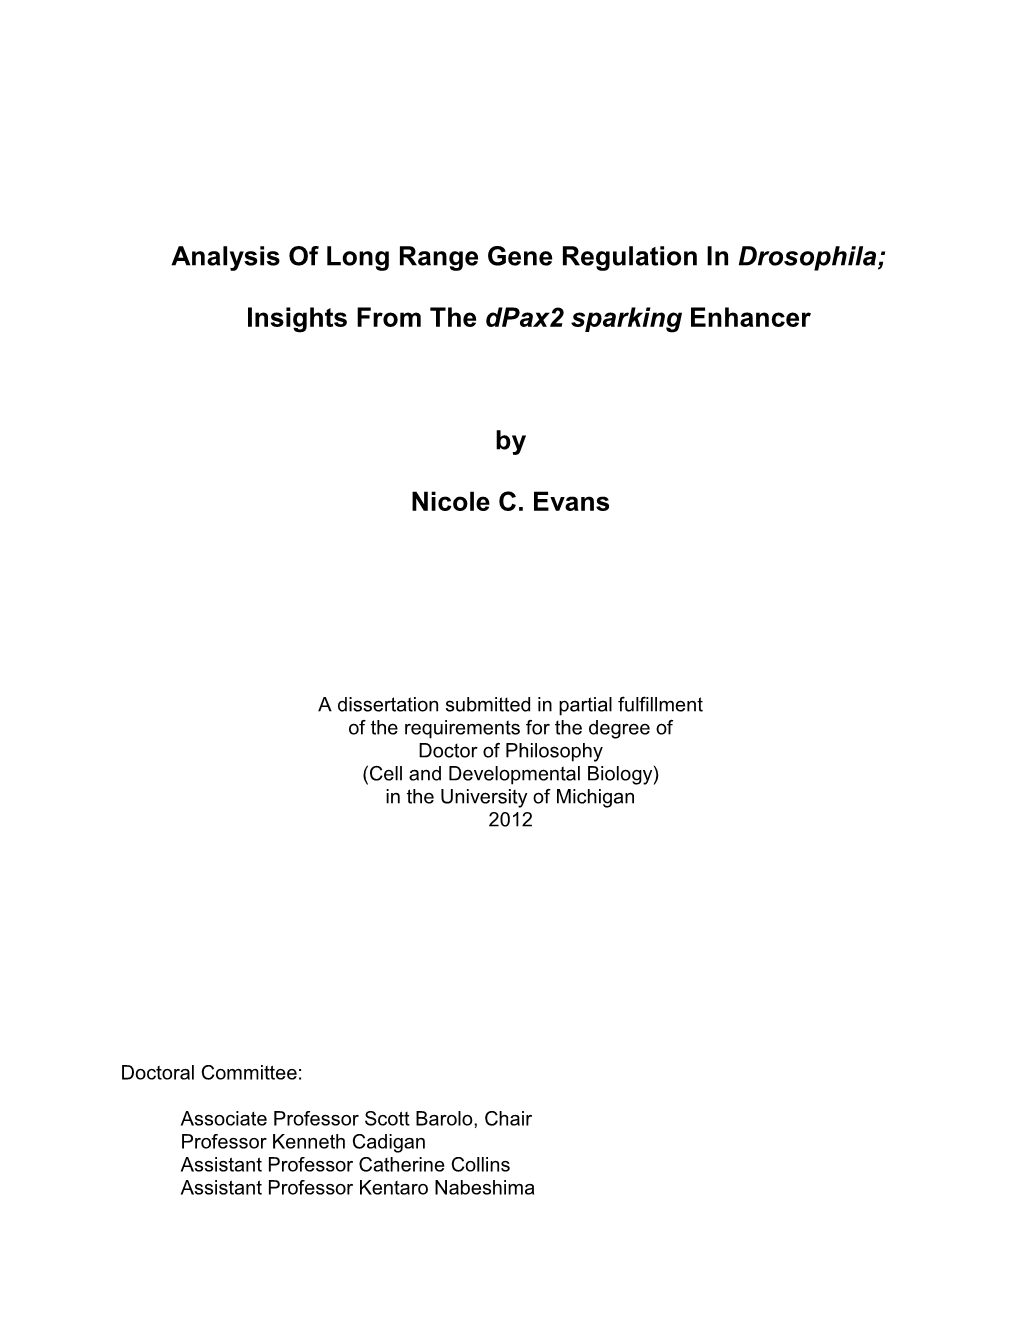 Analysis of Long Range Gene Regulation in Drosophila; Insights